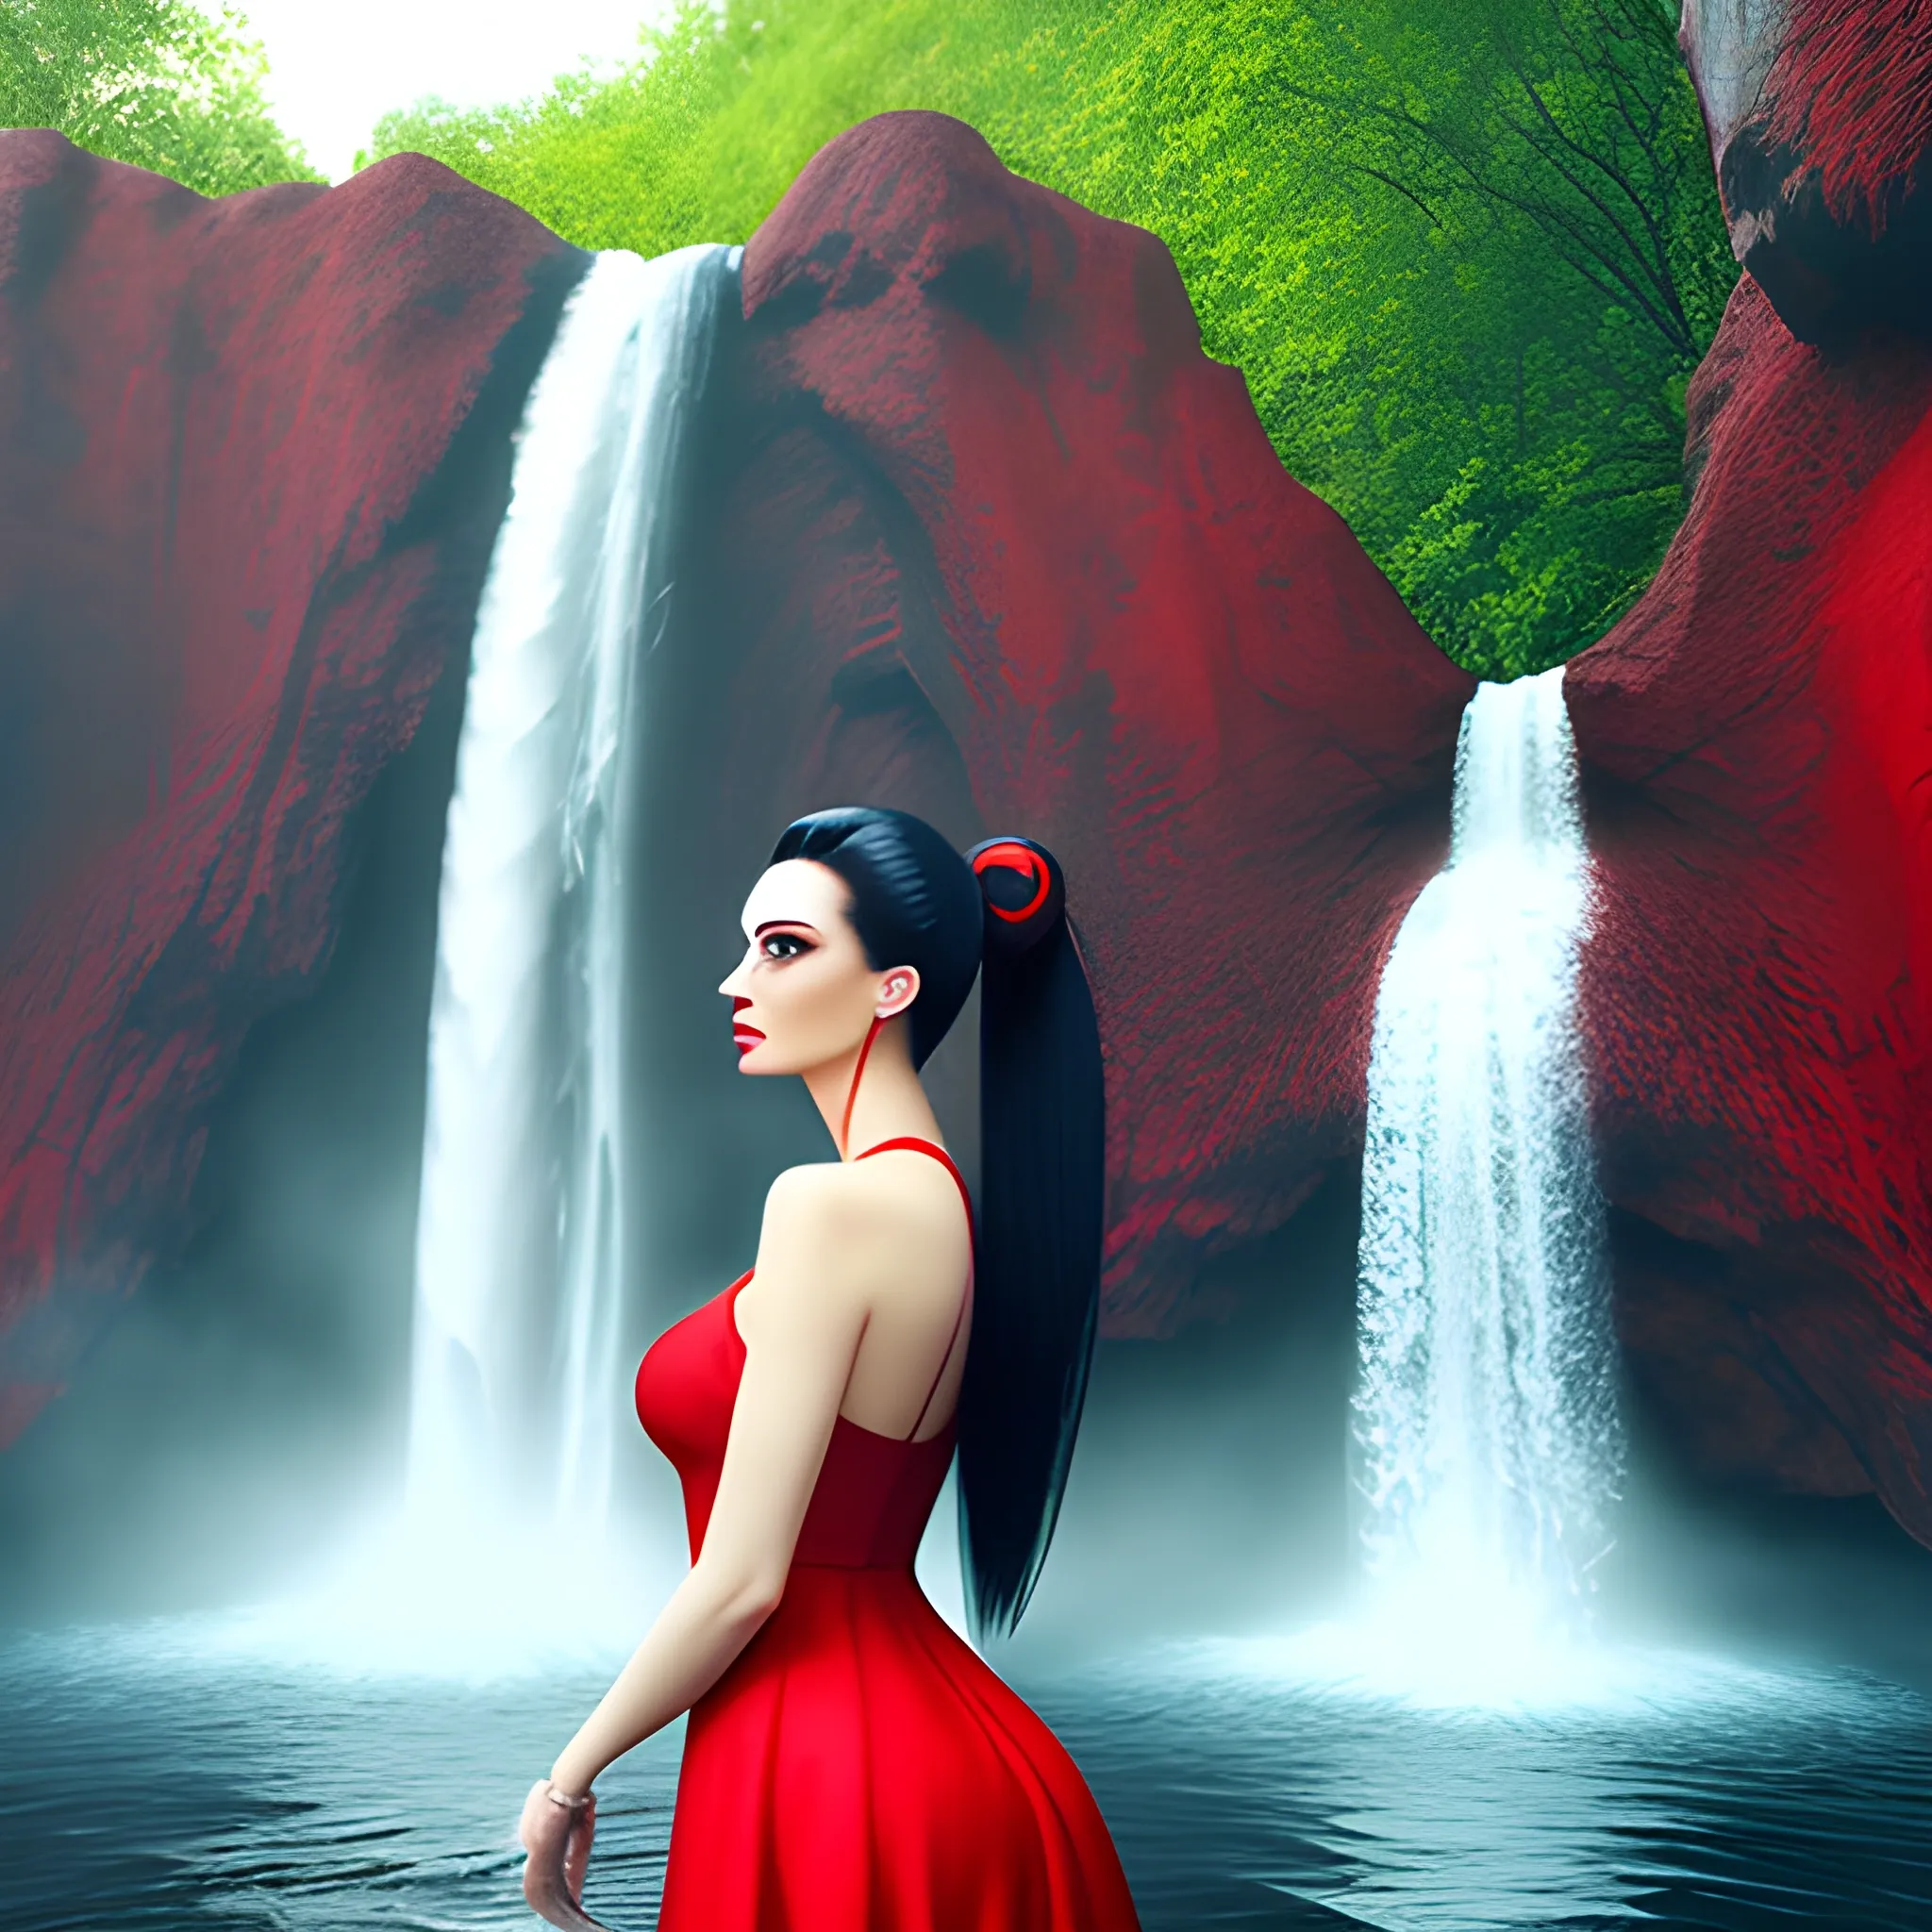 make it a beautiful girl, blac hair, bun hair, standing, red dress,  waterfall background, photorealistic, 4k,